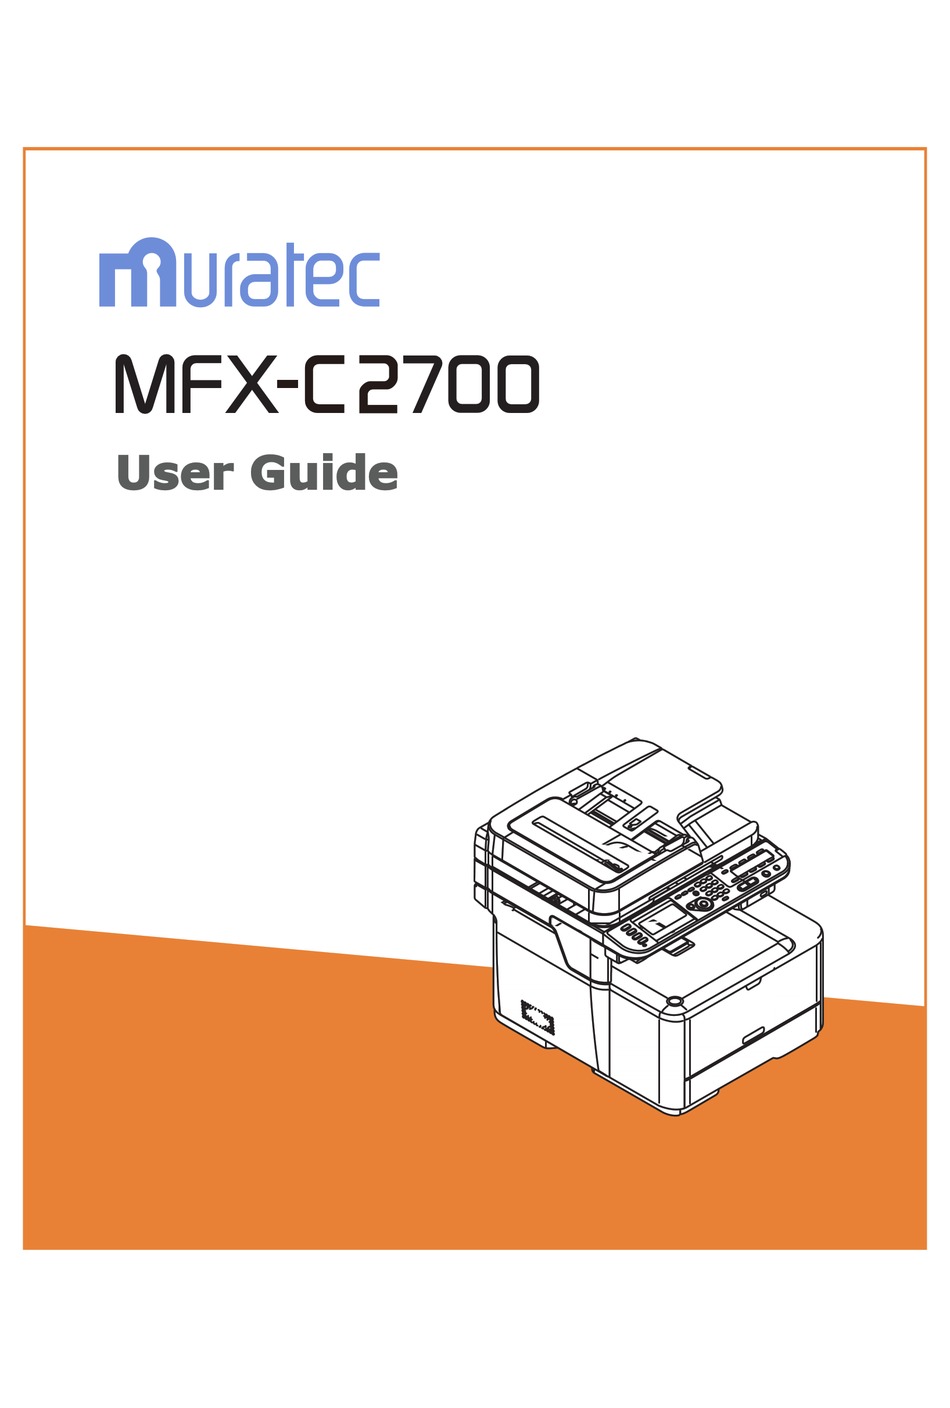 muratec mfx-c2700 drivers for mac os high sierra